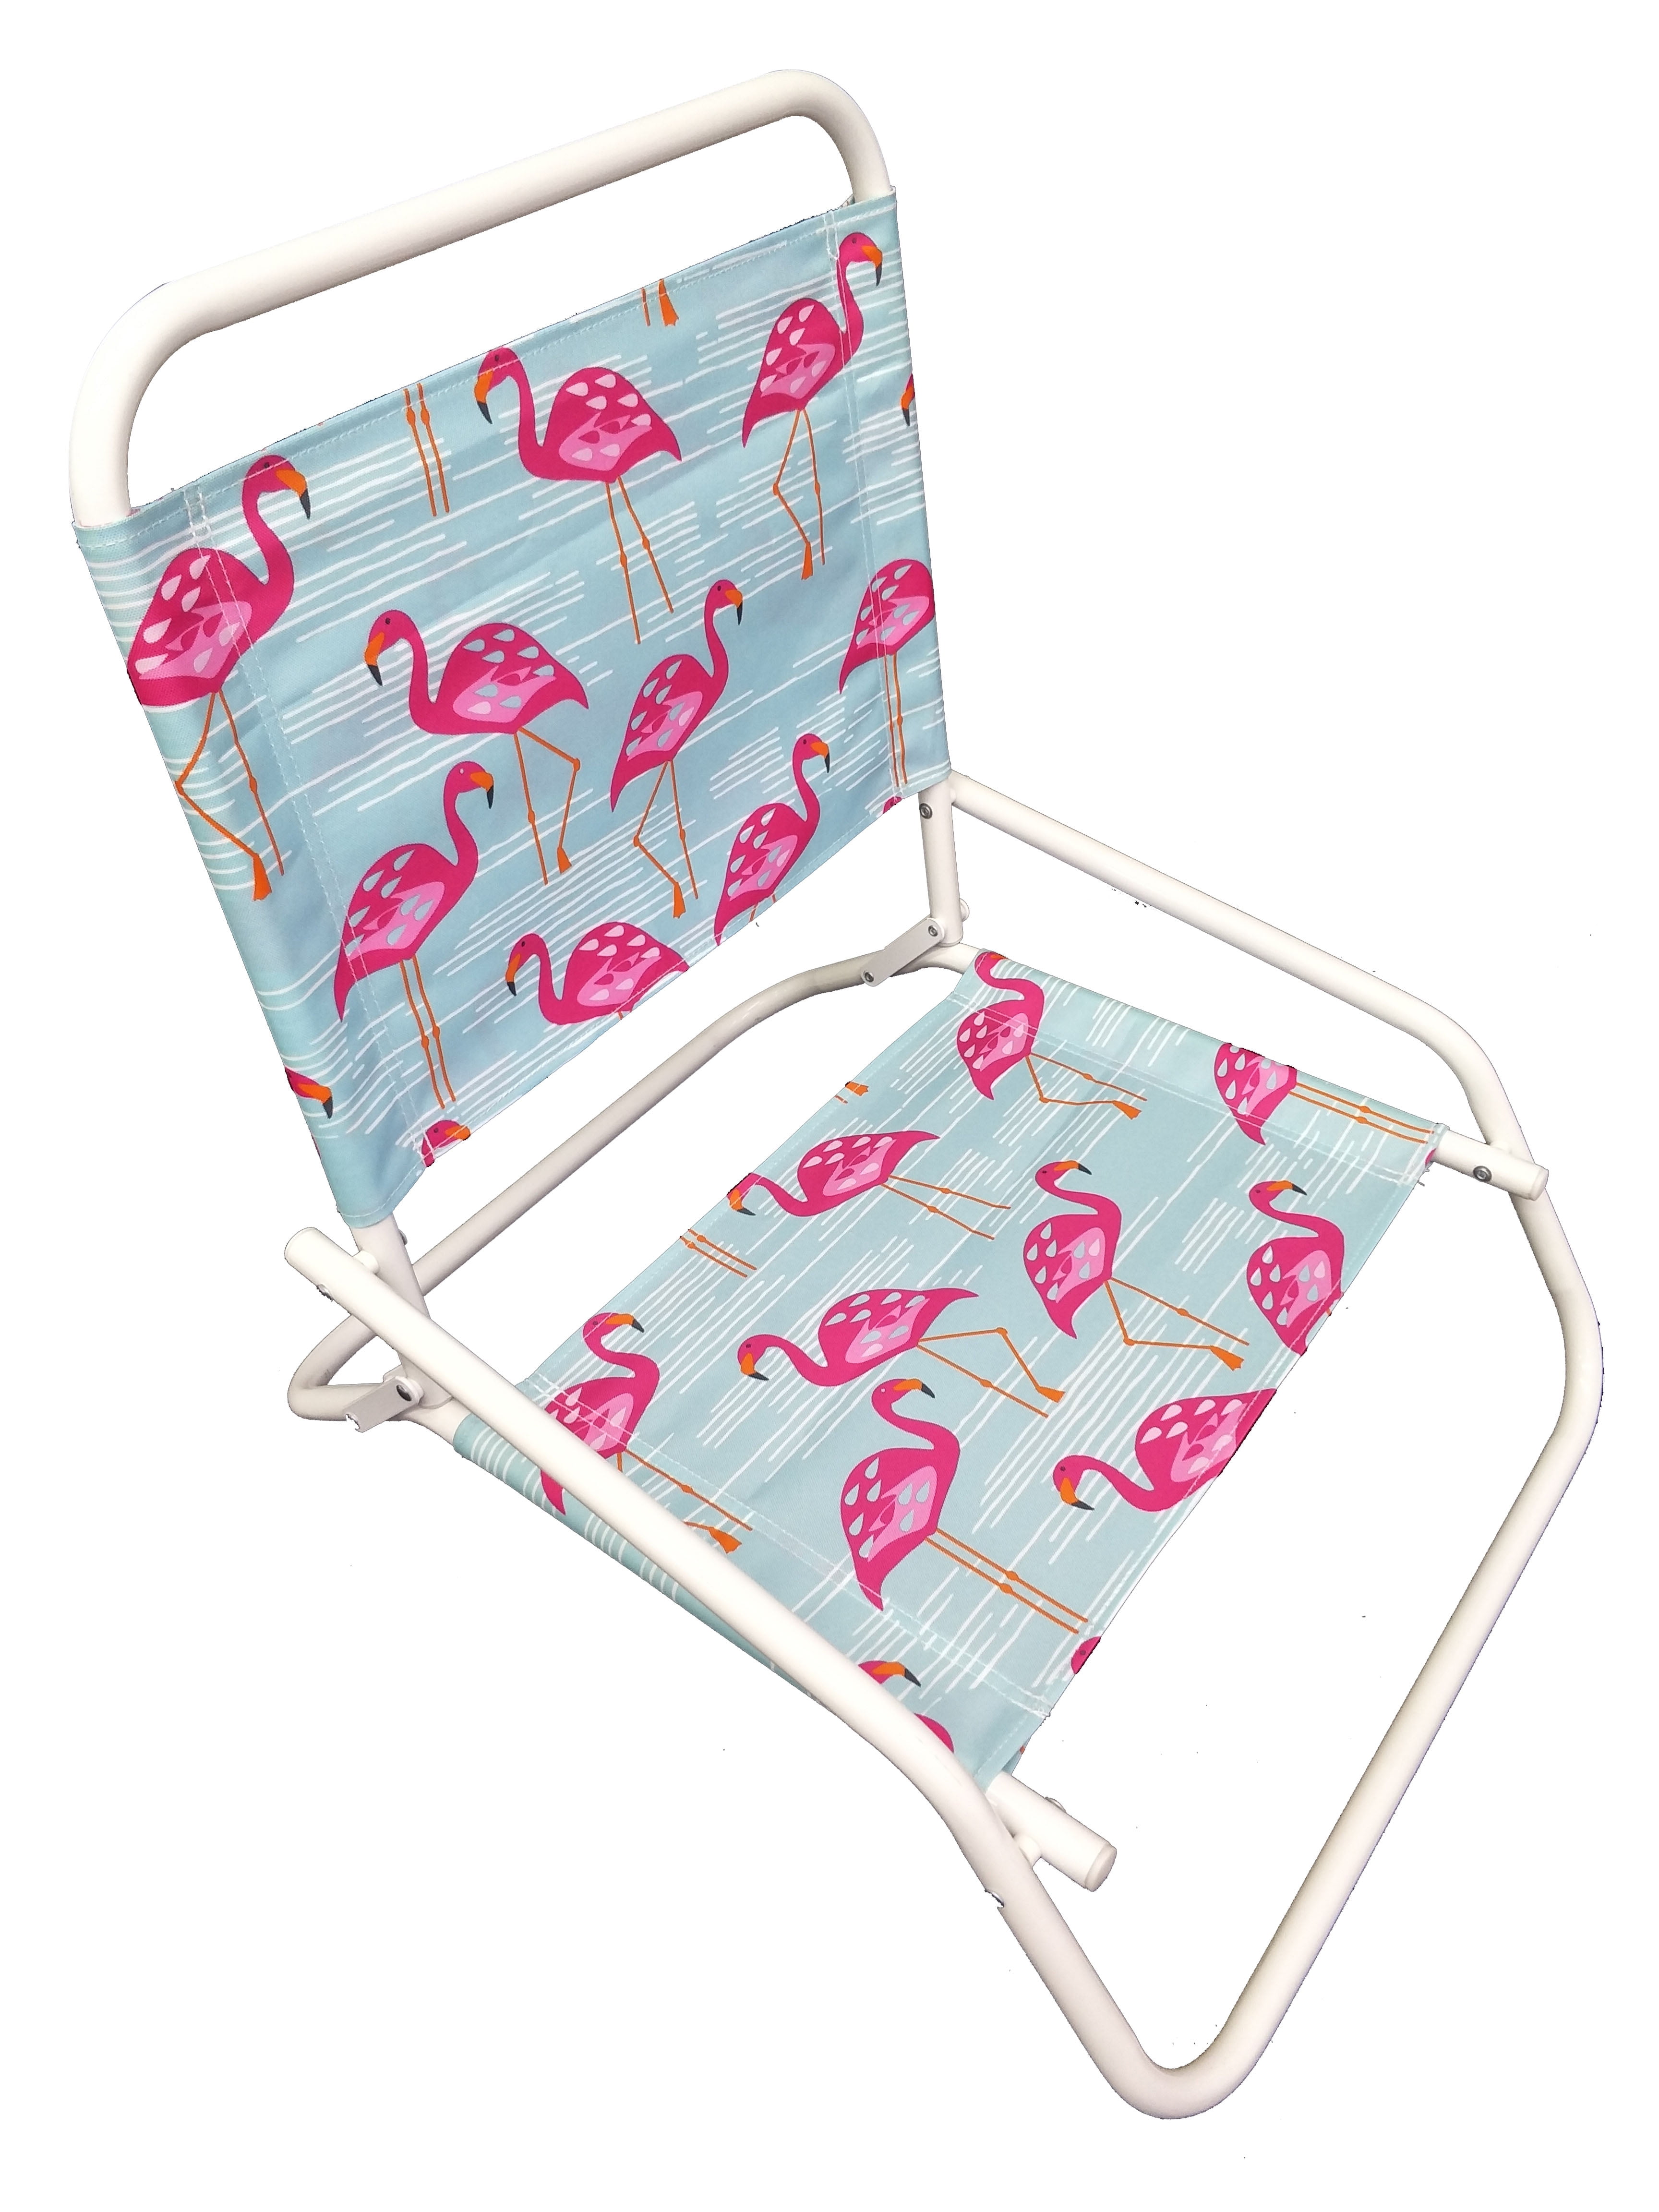 Unique Flamingo Beach Chair with Simple Decor